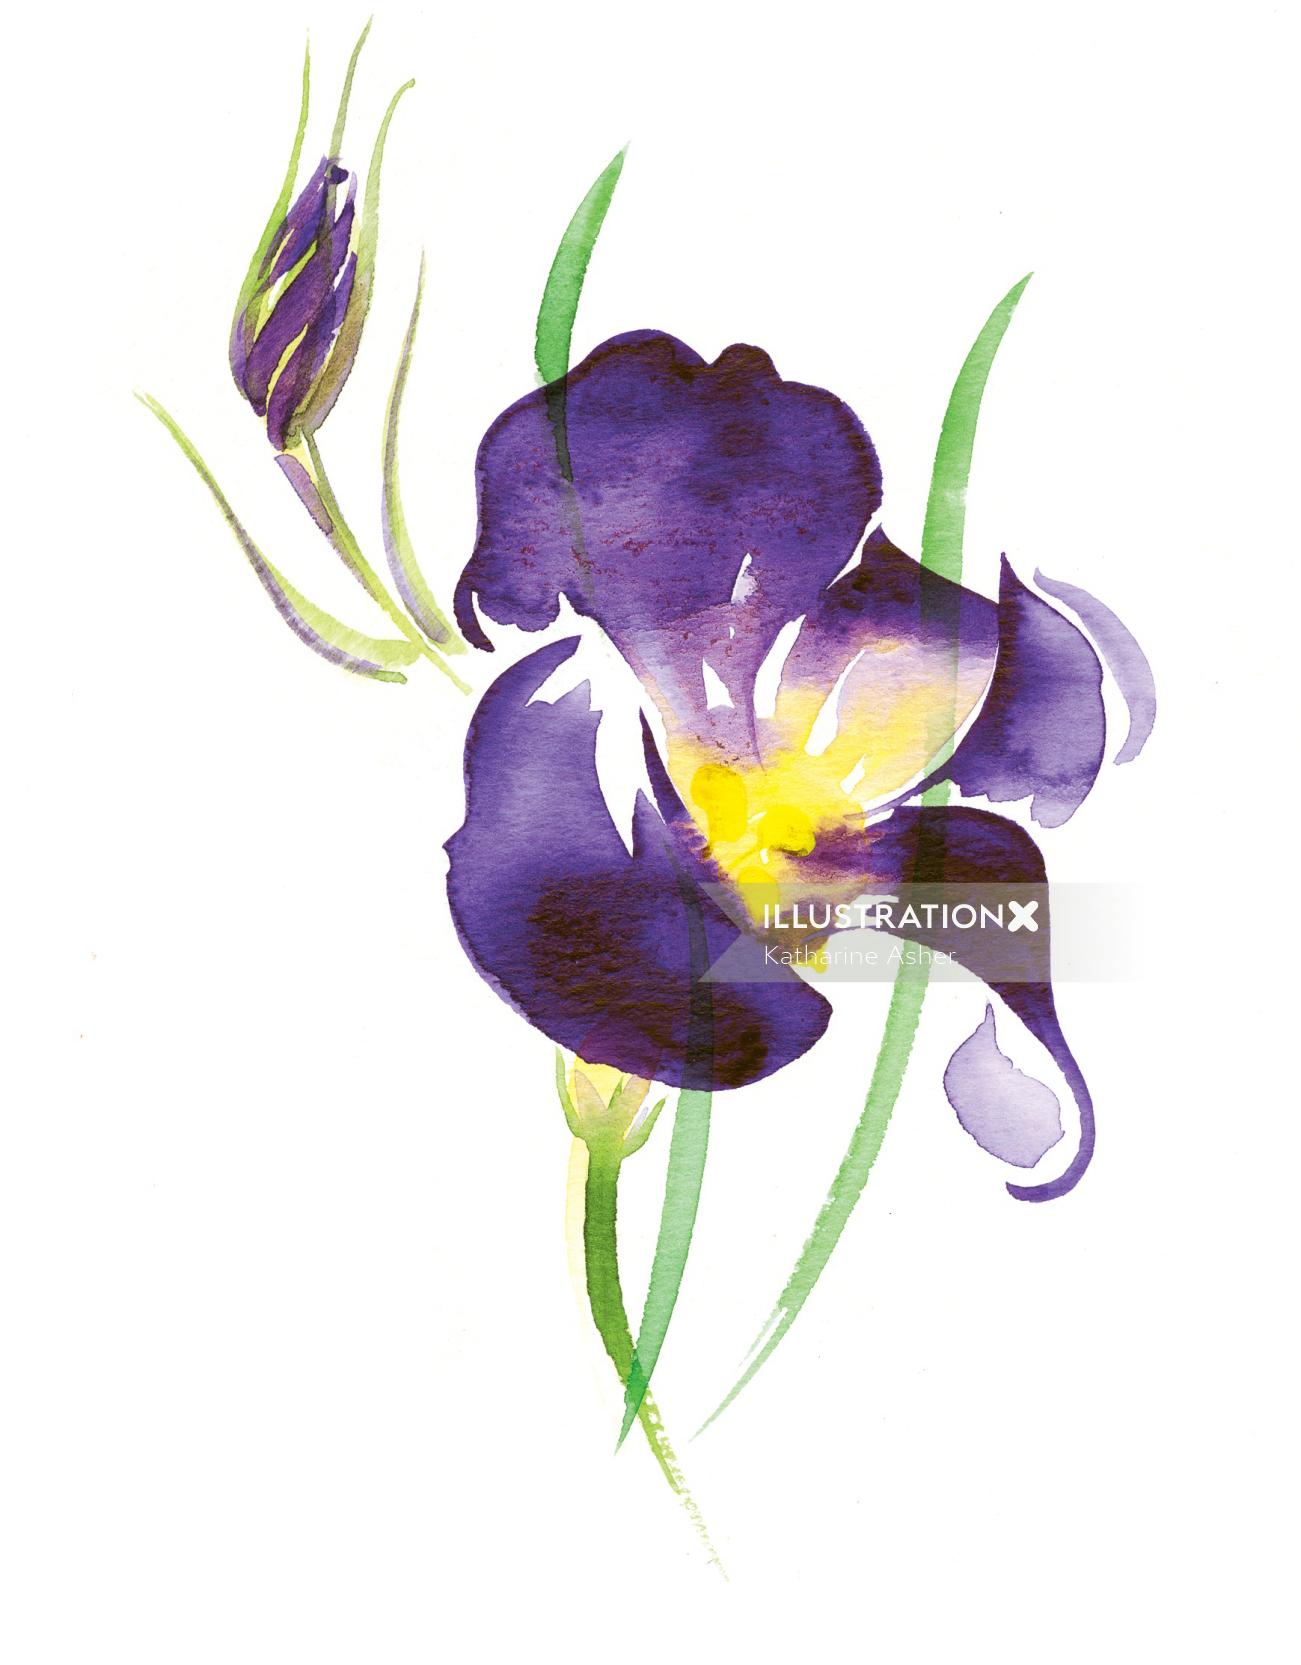 Illustration for BELLA FLORA cards by Katharine Asher